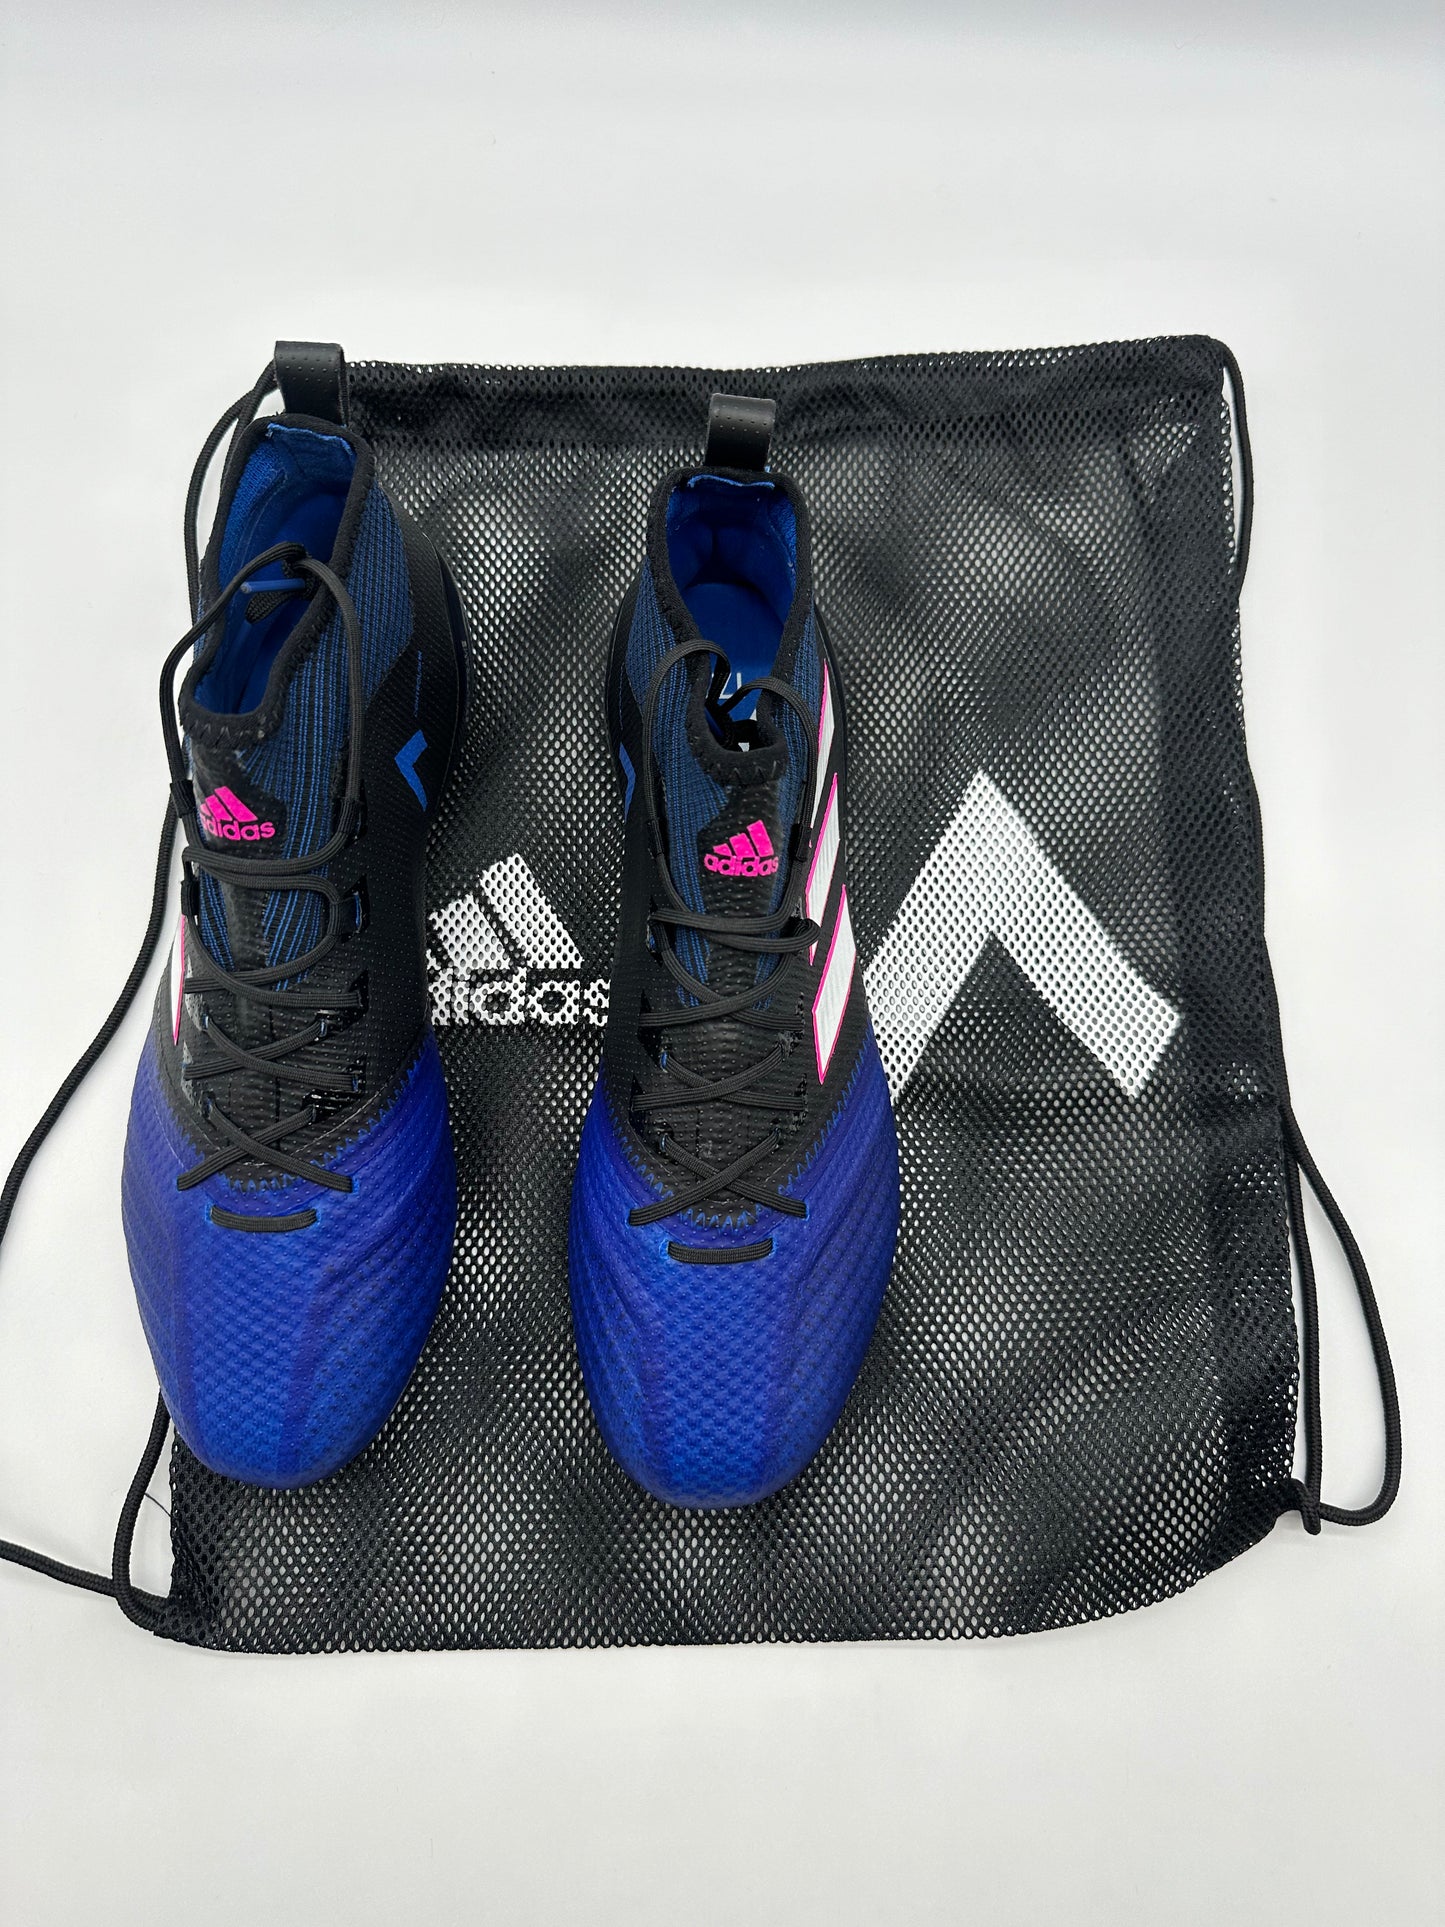 Adidas Ace 17.1 Primeknit FG Blue Black